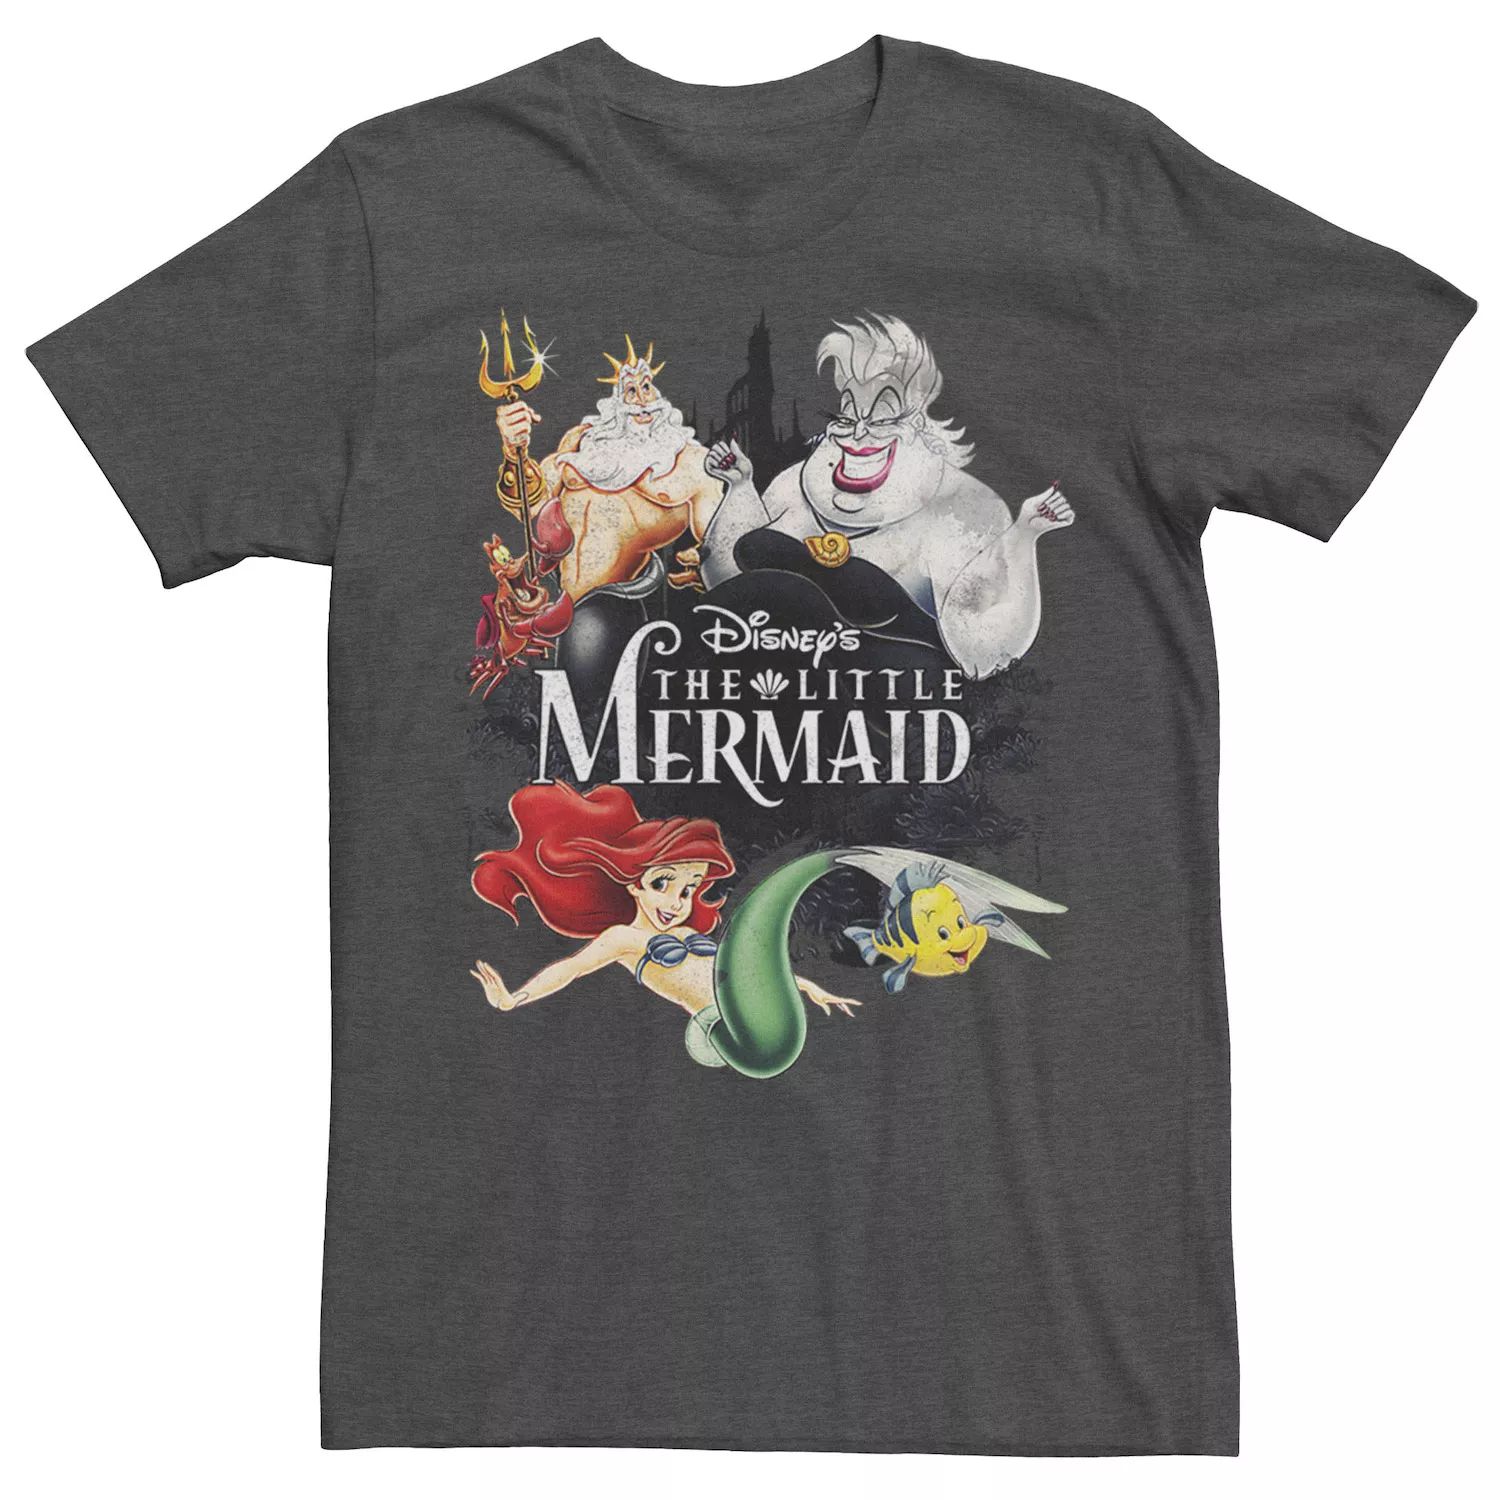 Мужская футболка с логотипом 's The Little Mermaid и коллажем Disney